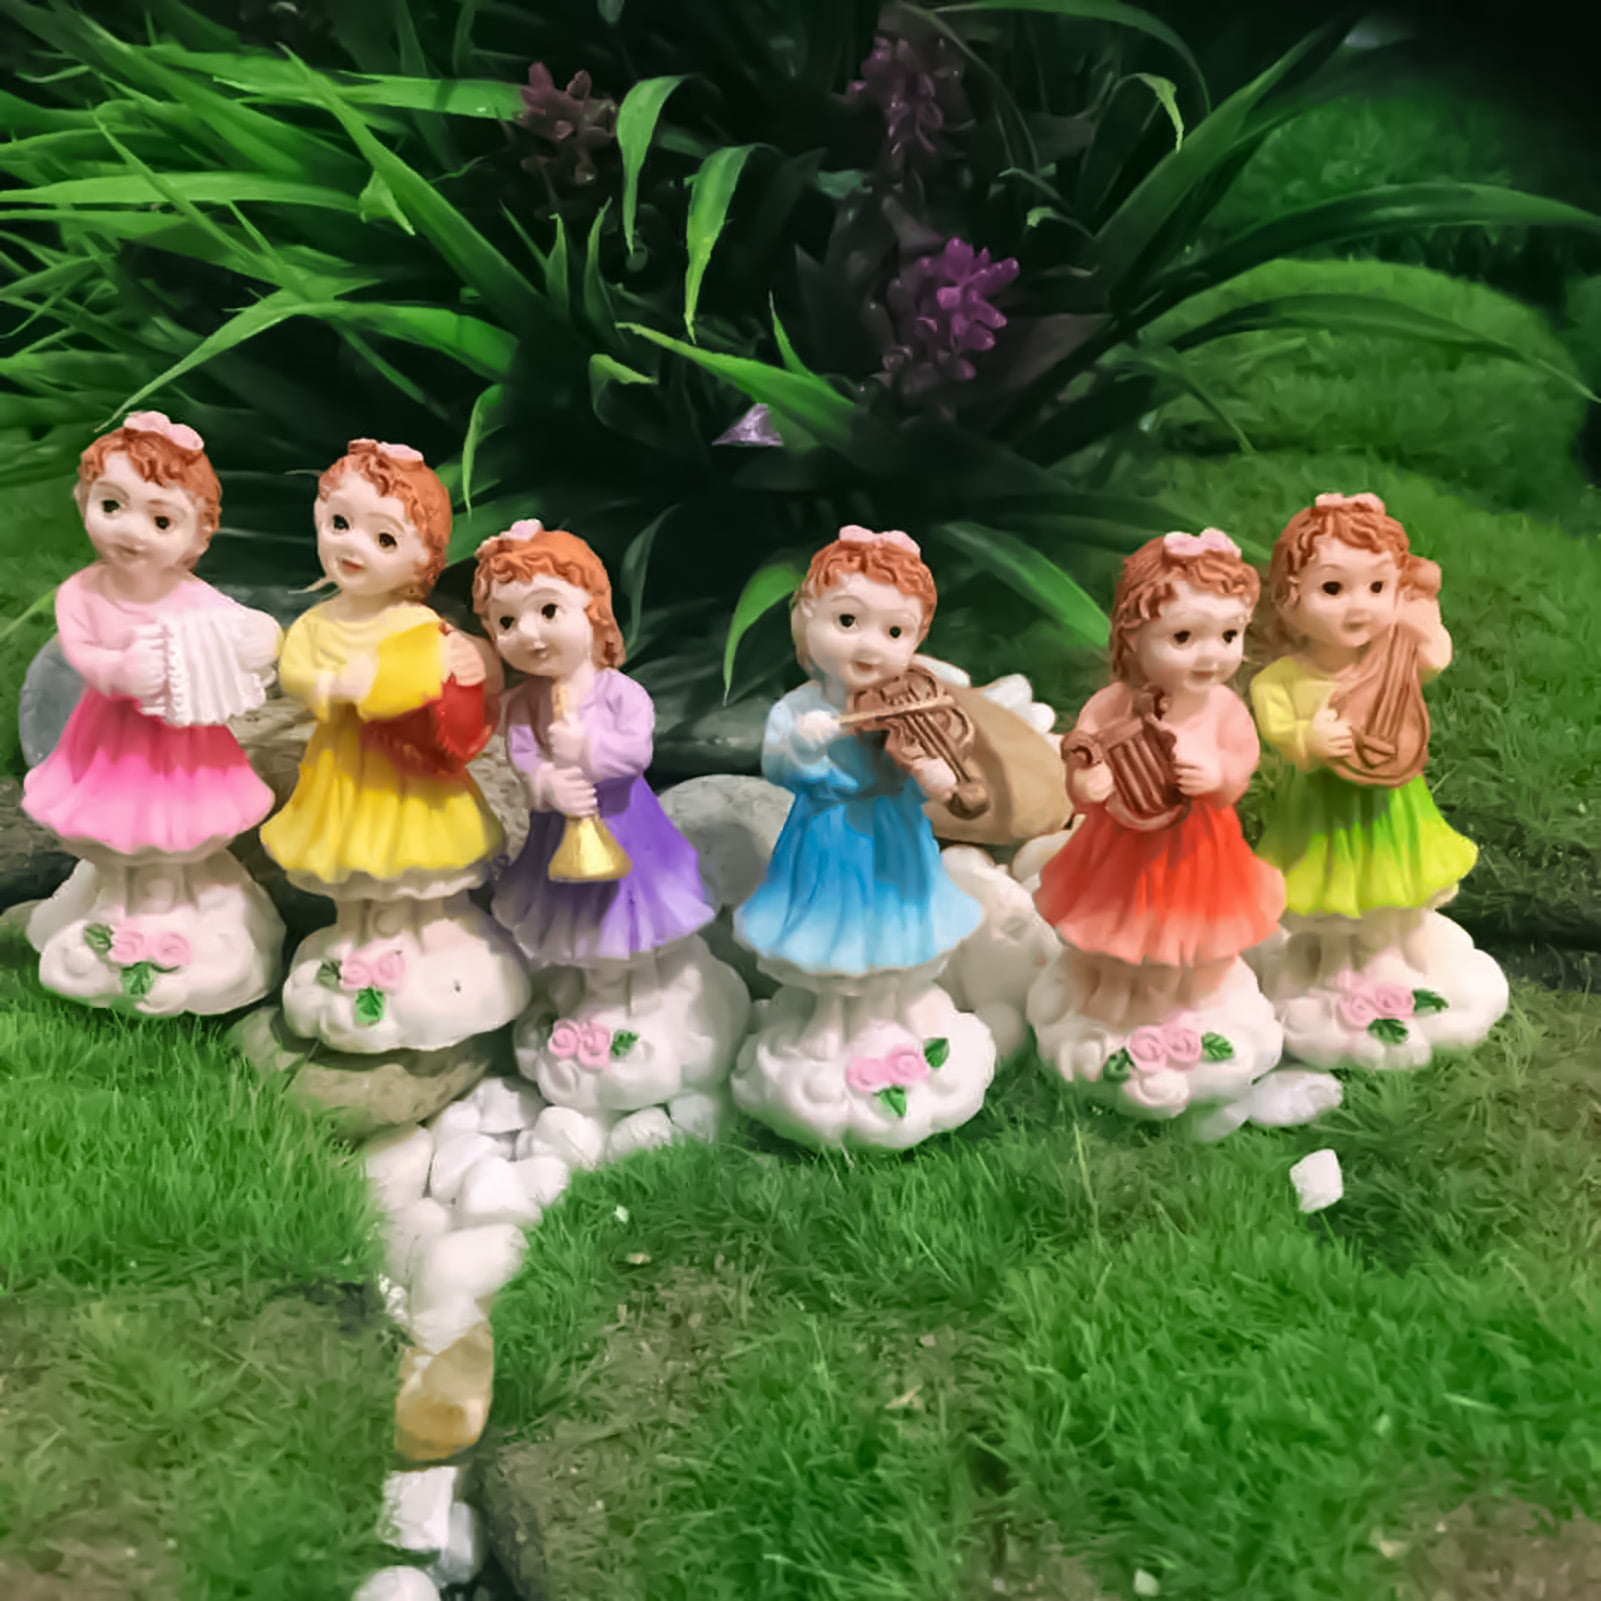 7 Pcs Fairy Pixie Girl Fly Wing Collection Playset Doll Cake Topper DIY Dollhouse Landscape Scenes Fairy Garden Plant Pot Decor Fairies Miniature Figures 3.9 Tall 